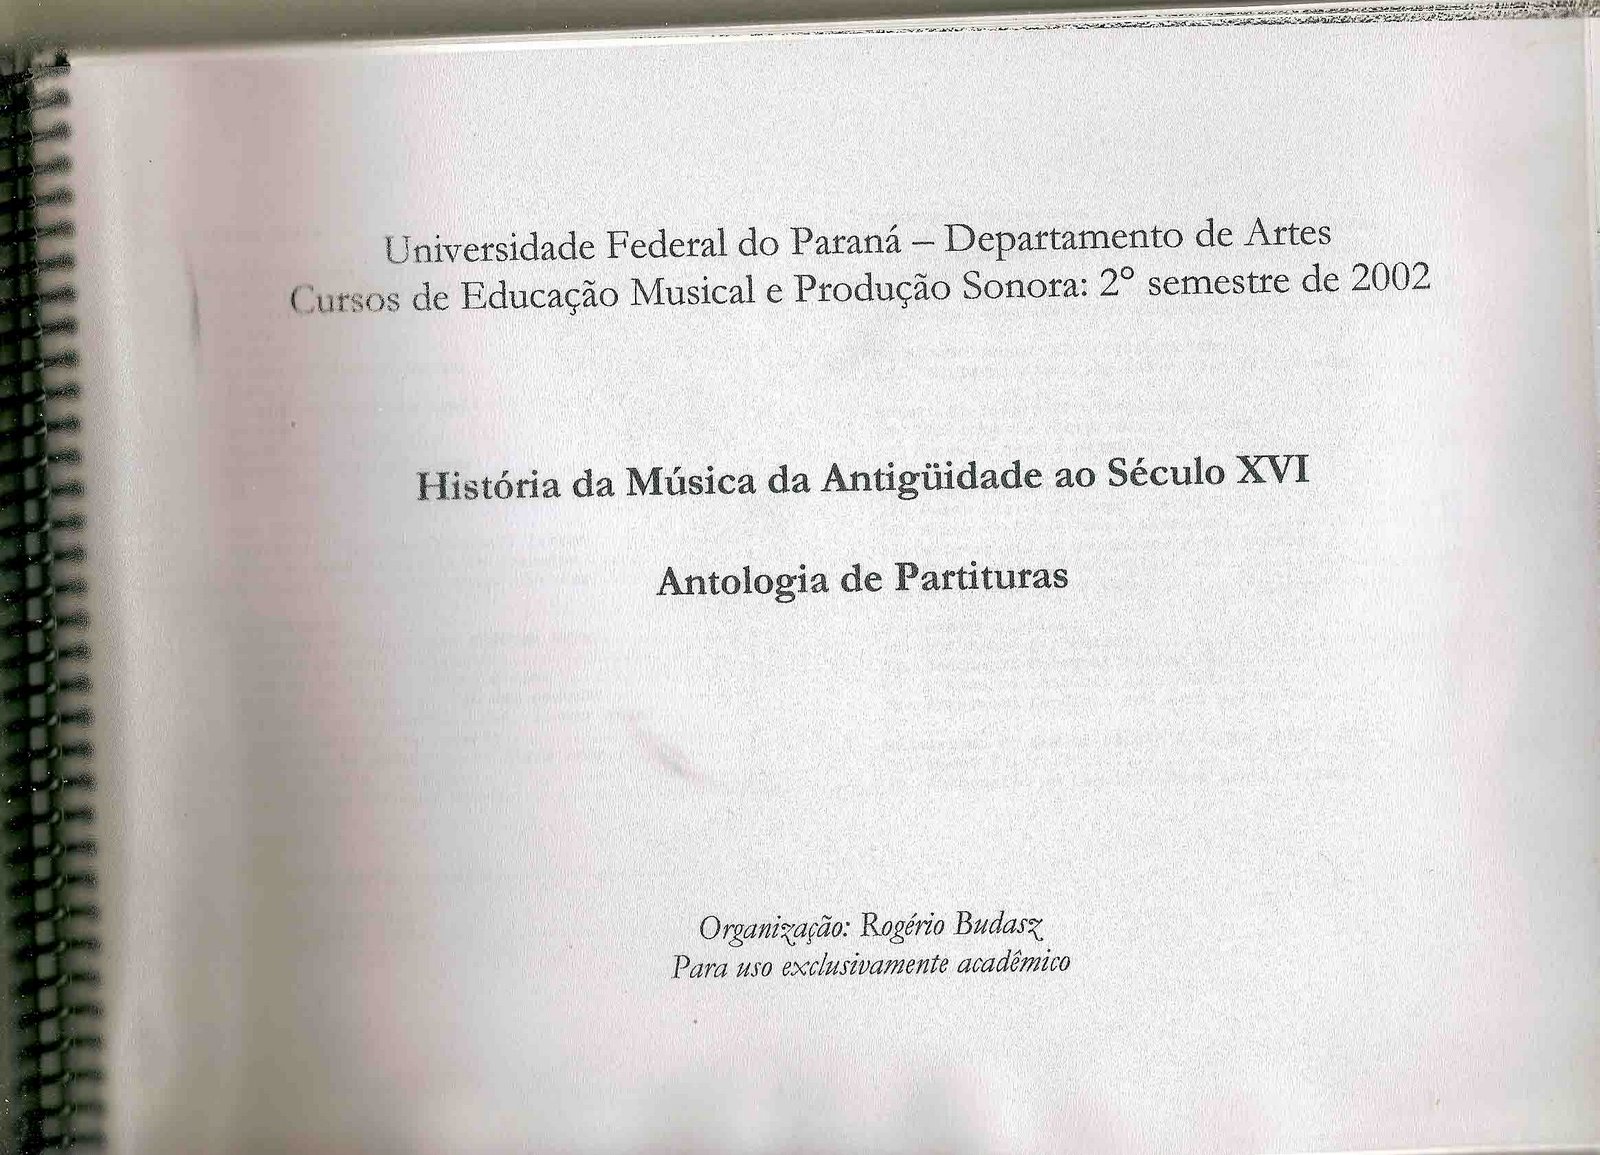 [Antologia+de+Partiruras+UFPR+2002.jpg]